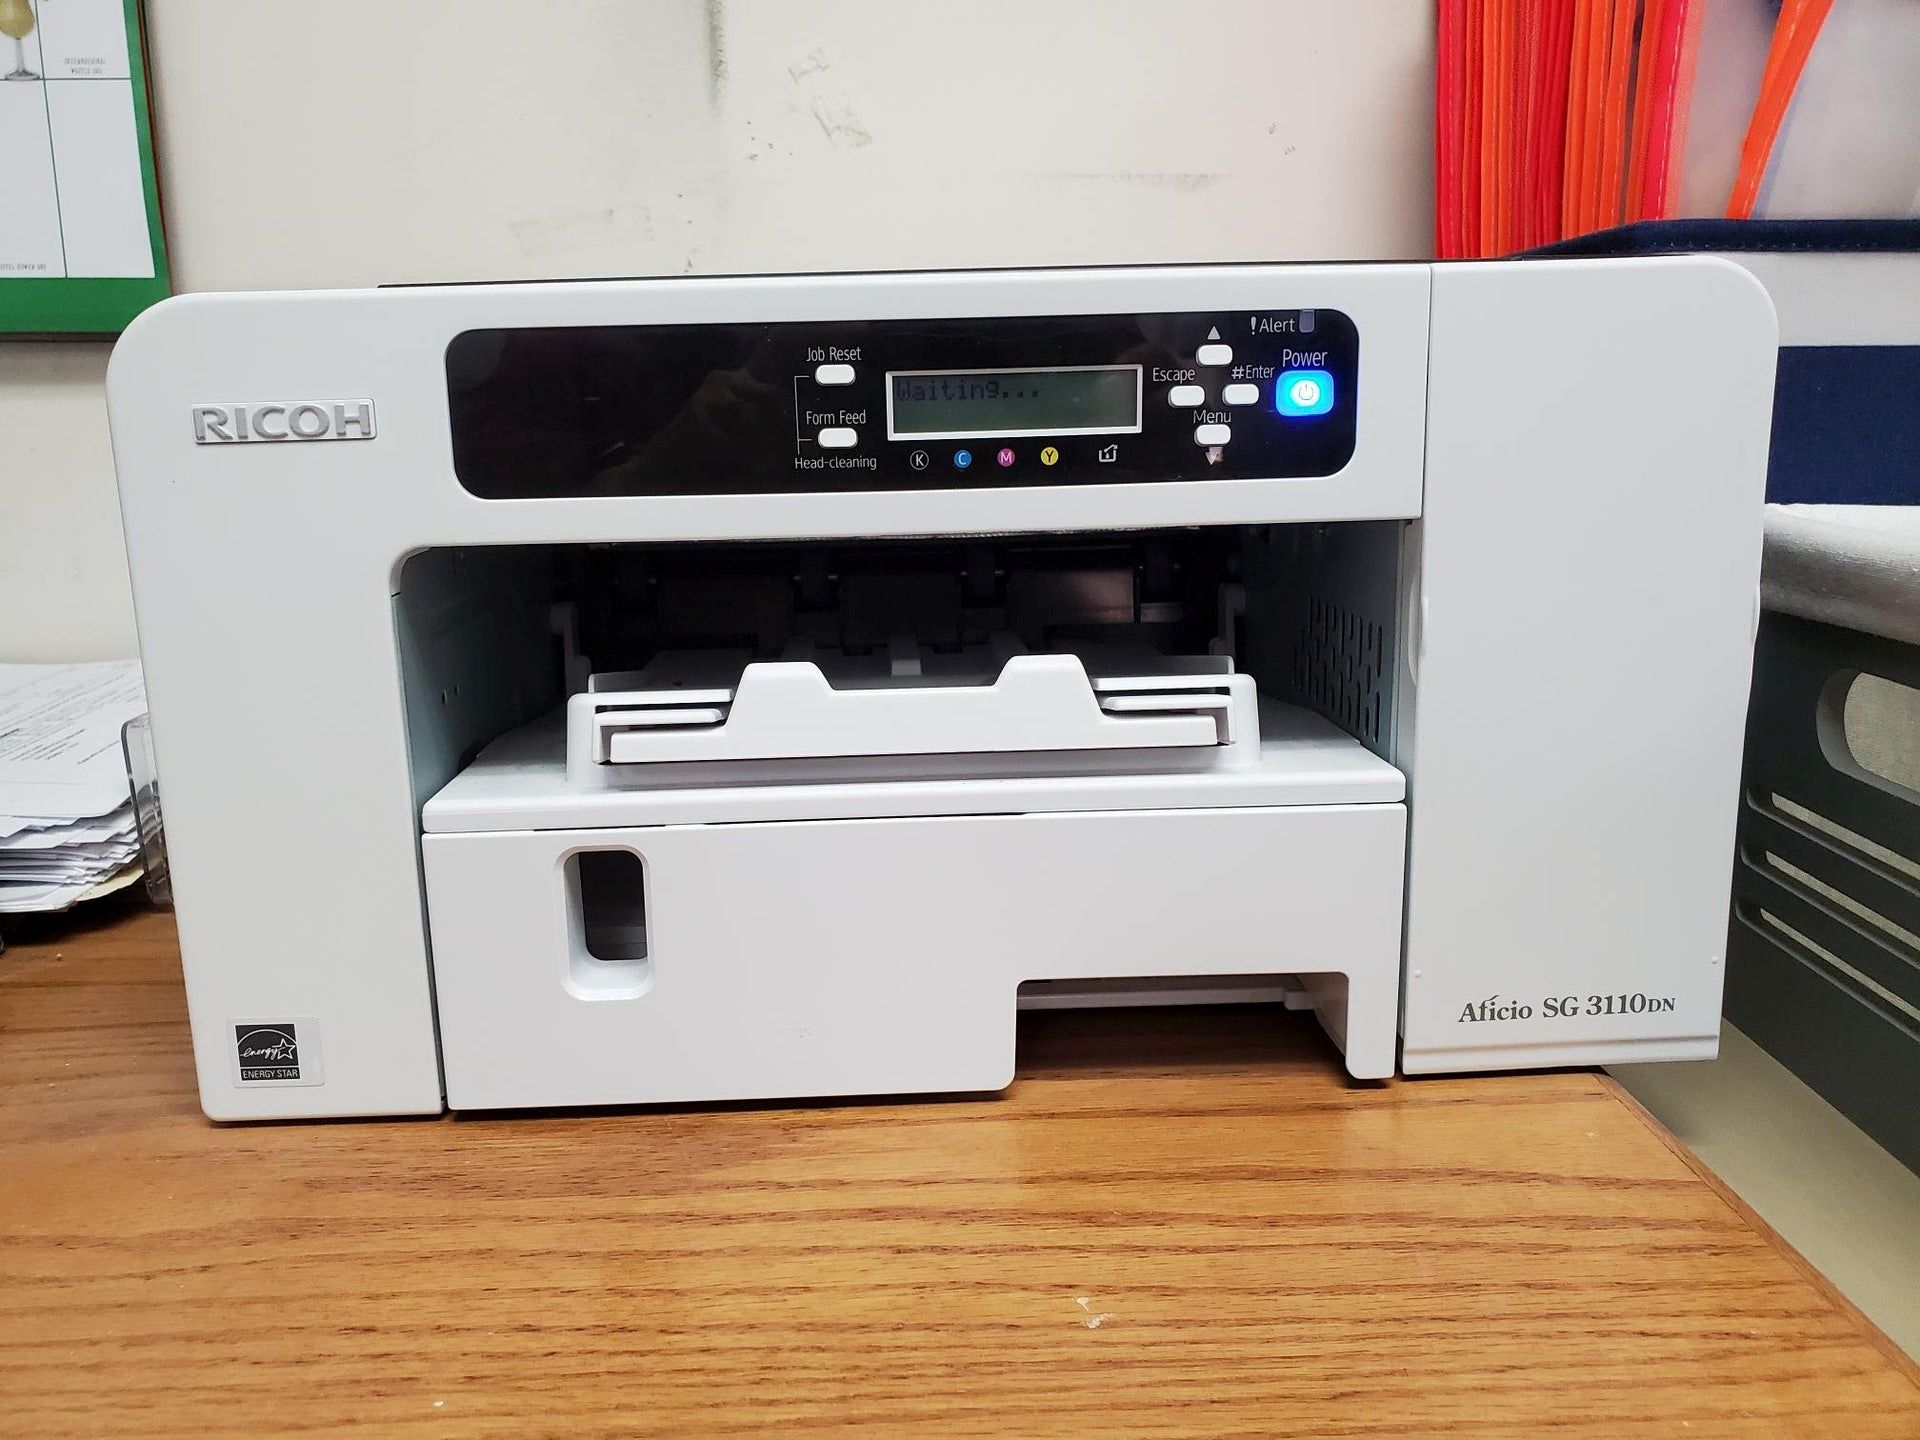 How To Reset Ricoh Printer